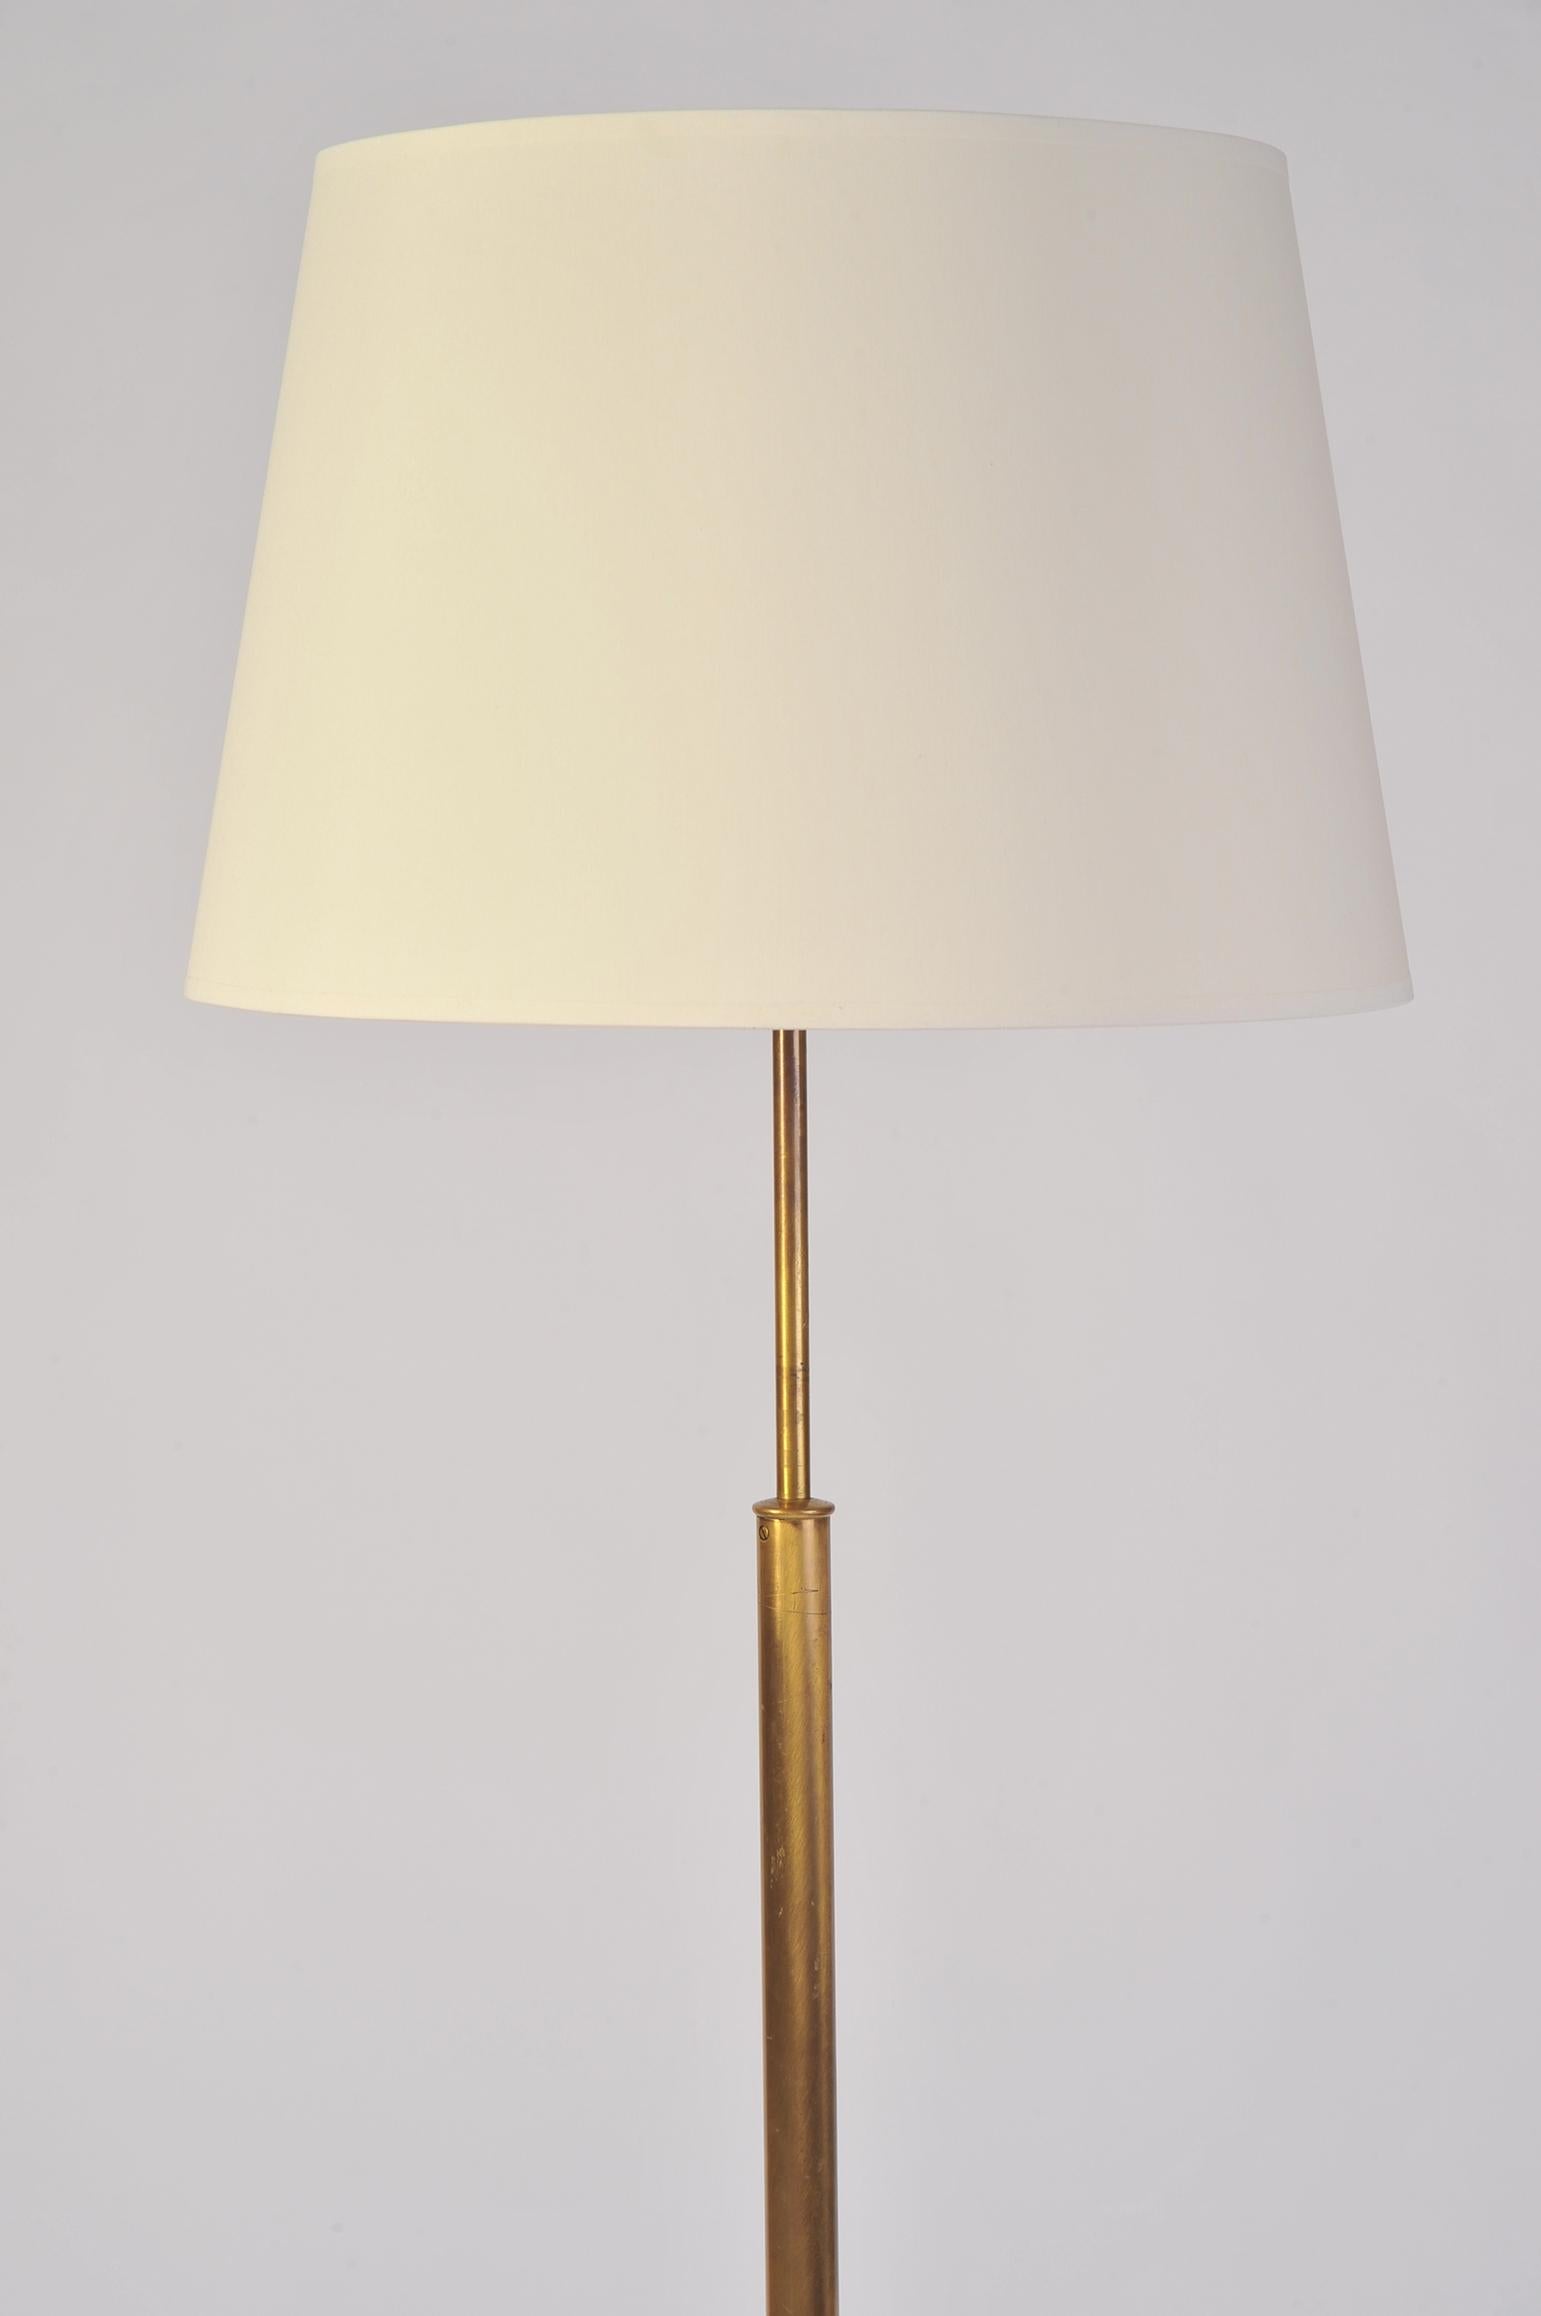 Pair of 1950s Brass Floor Lamps by Josef Frank, Model 2148 2